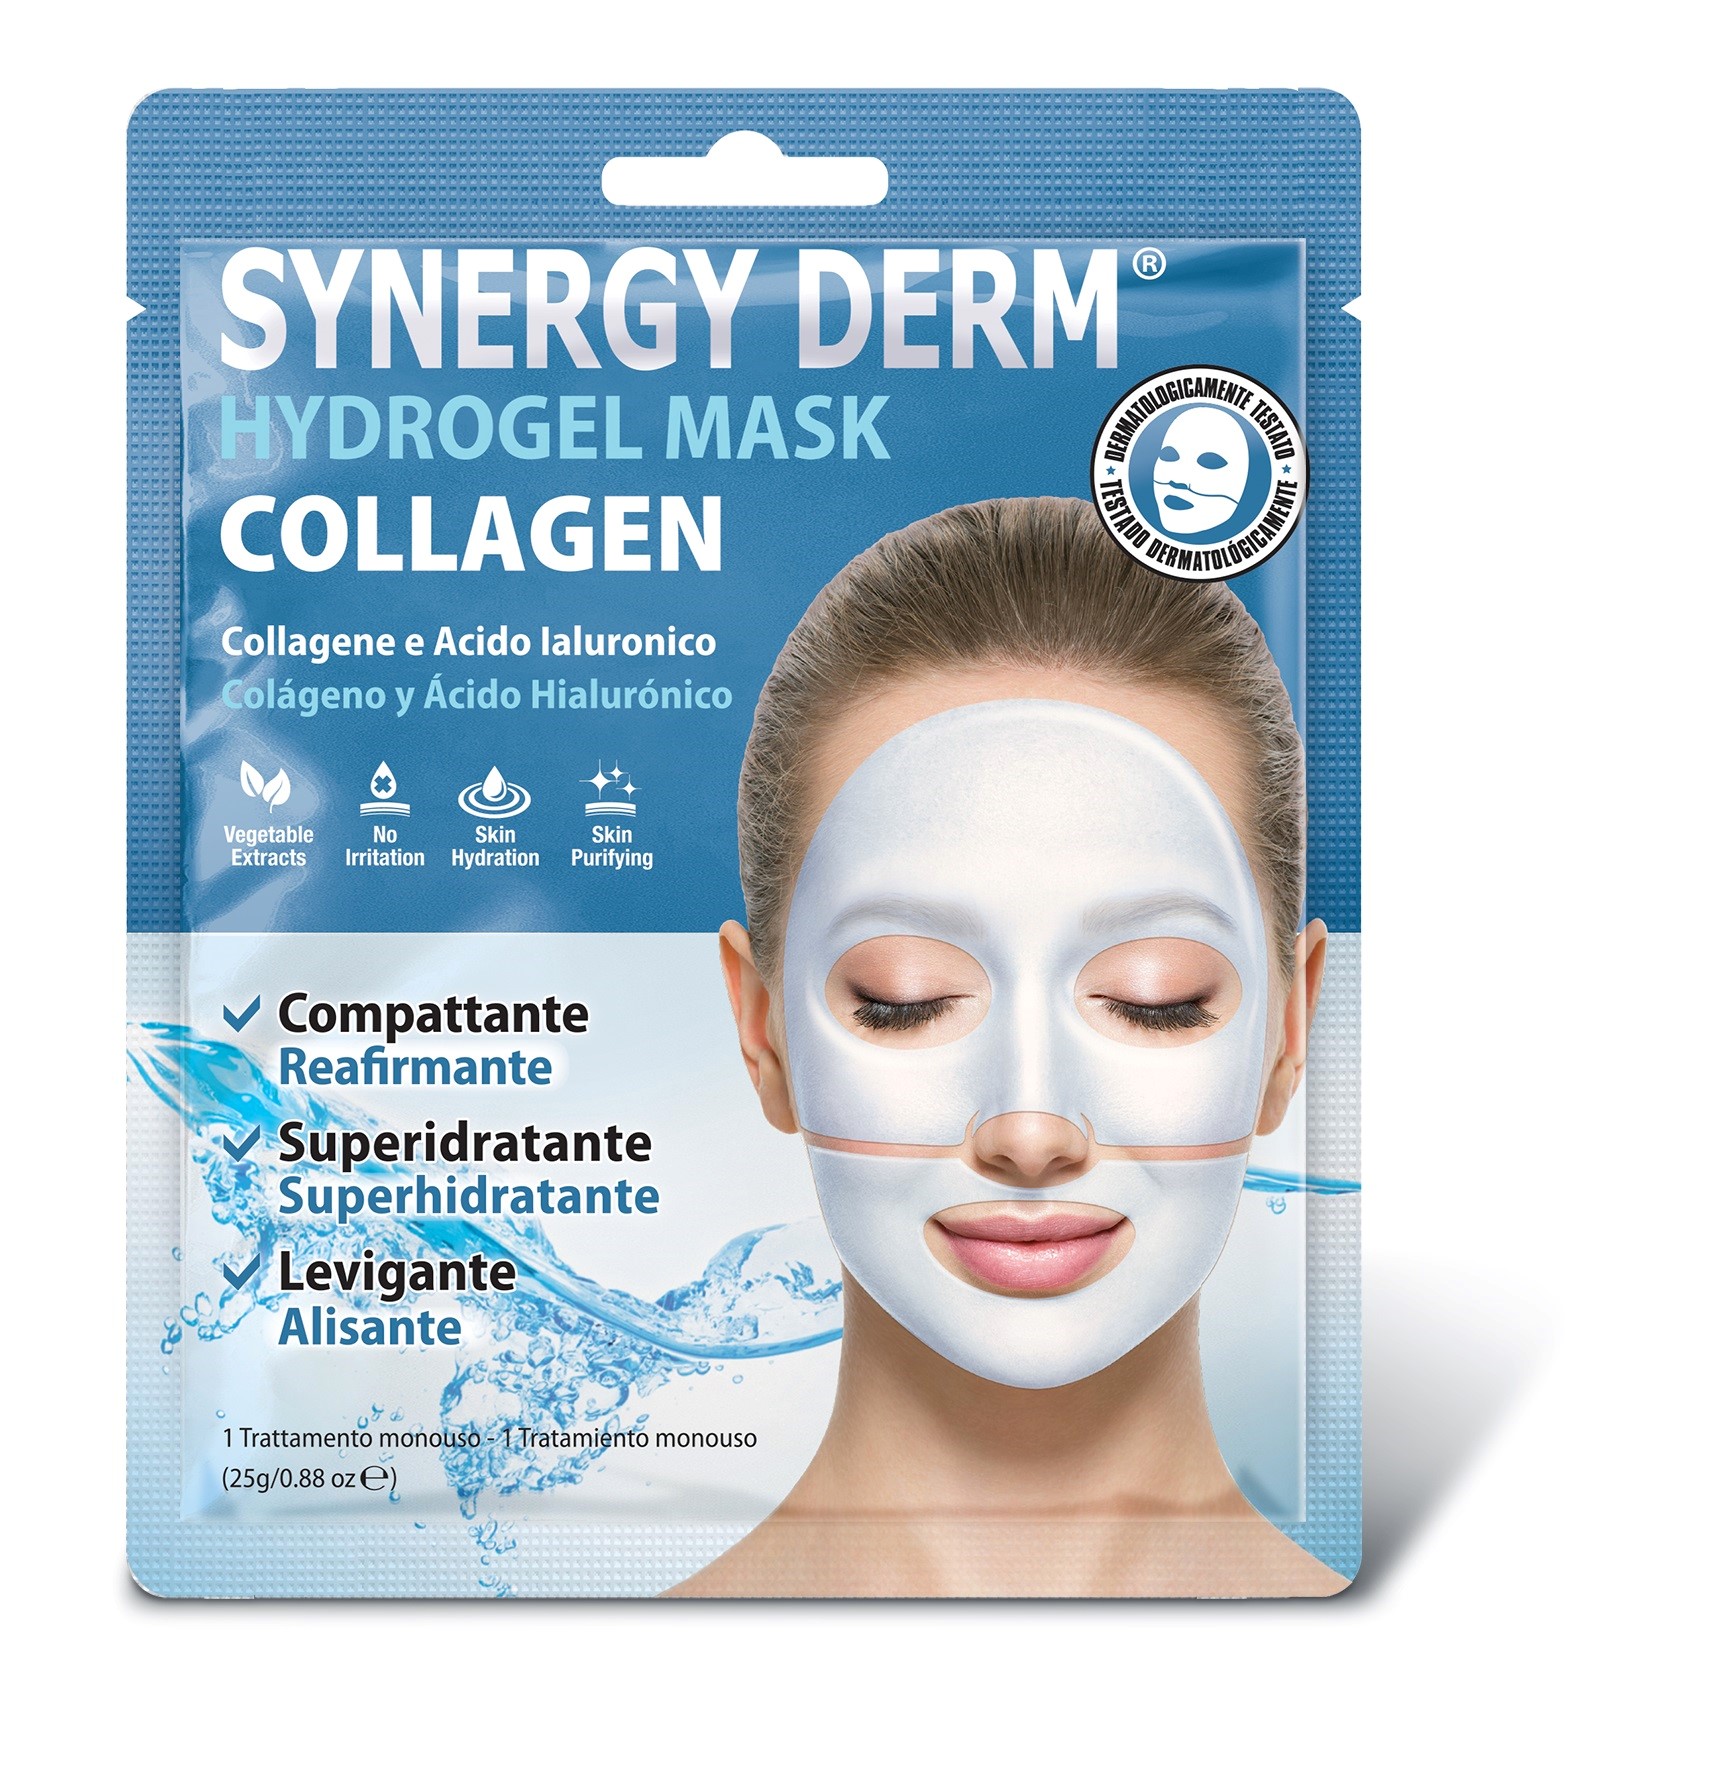 Synergy Derm : Maschere Hydrogel per un viso luminoso